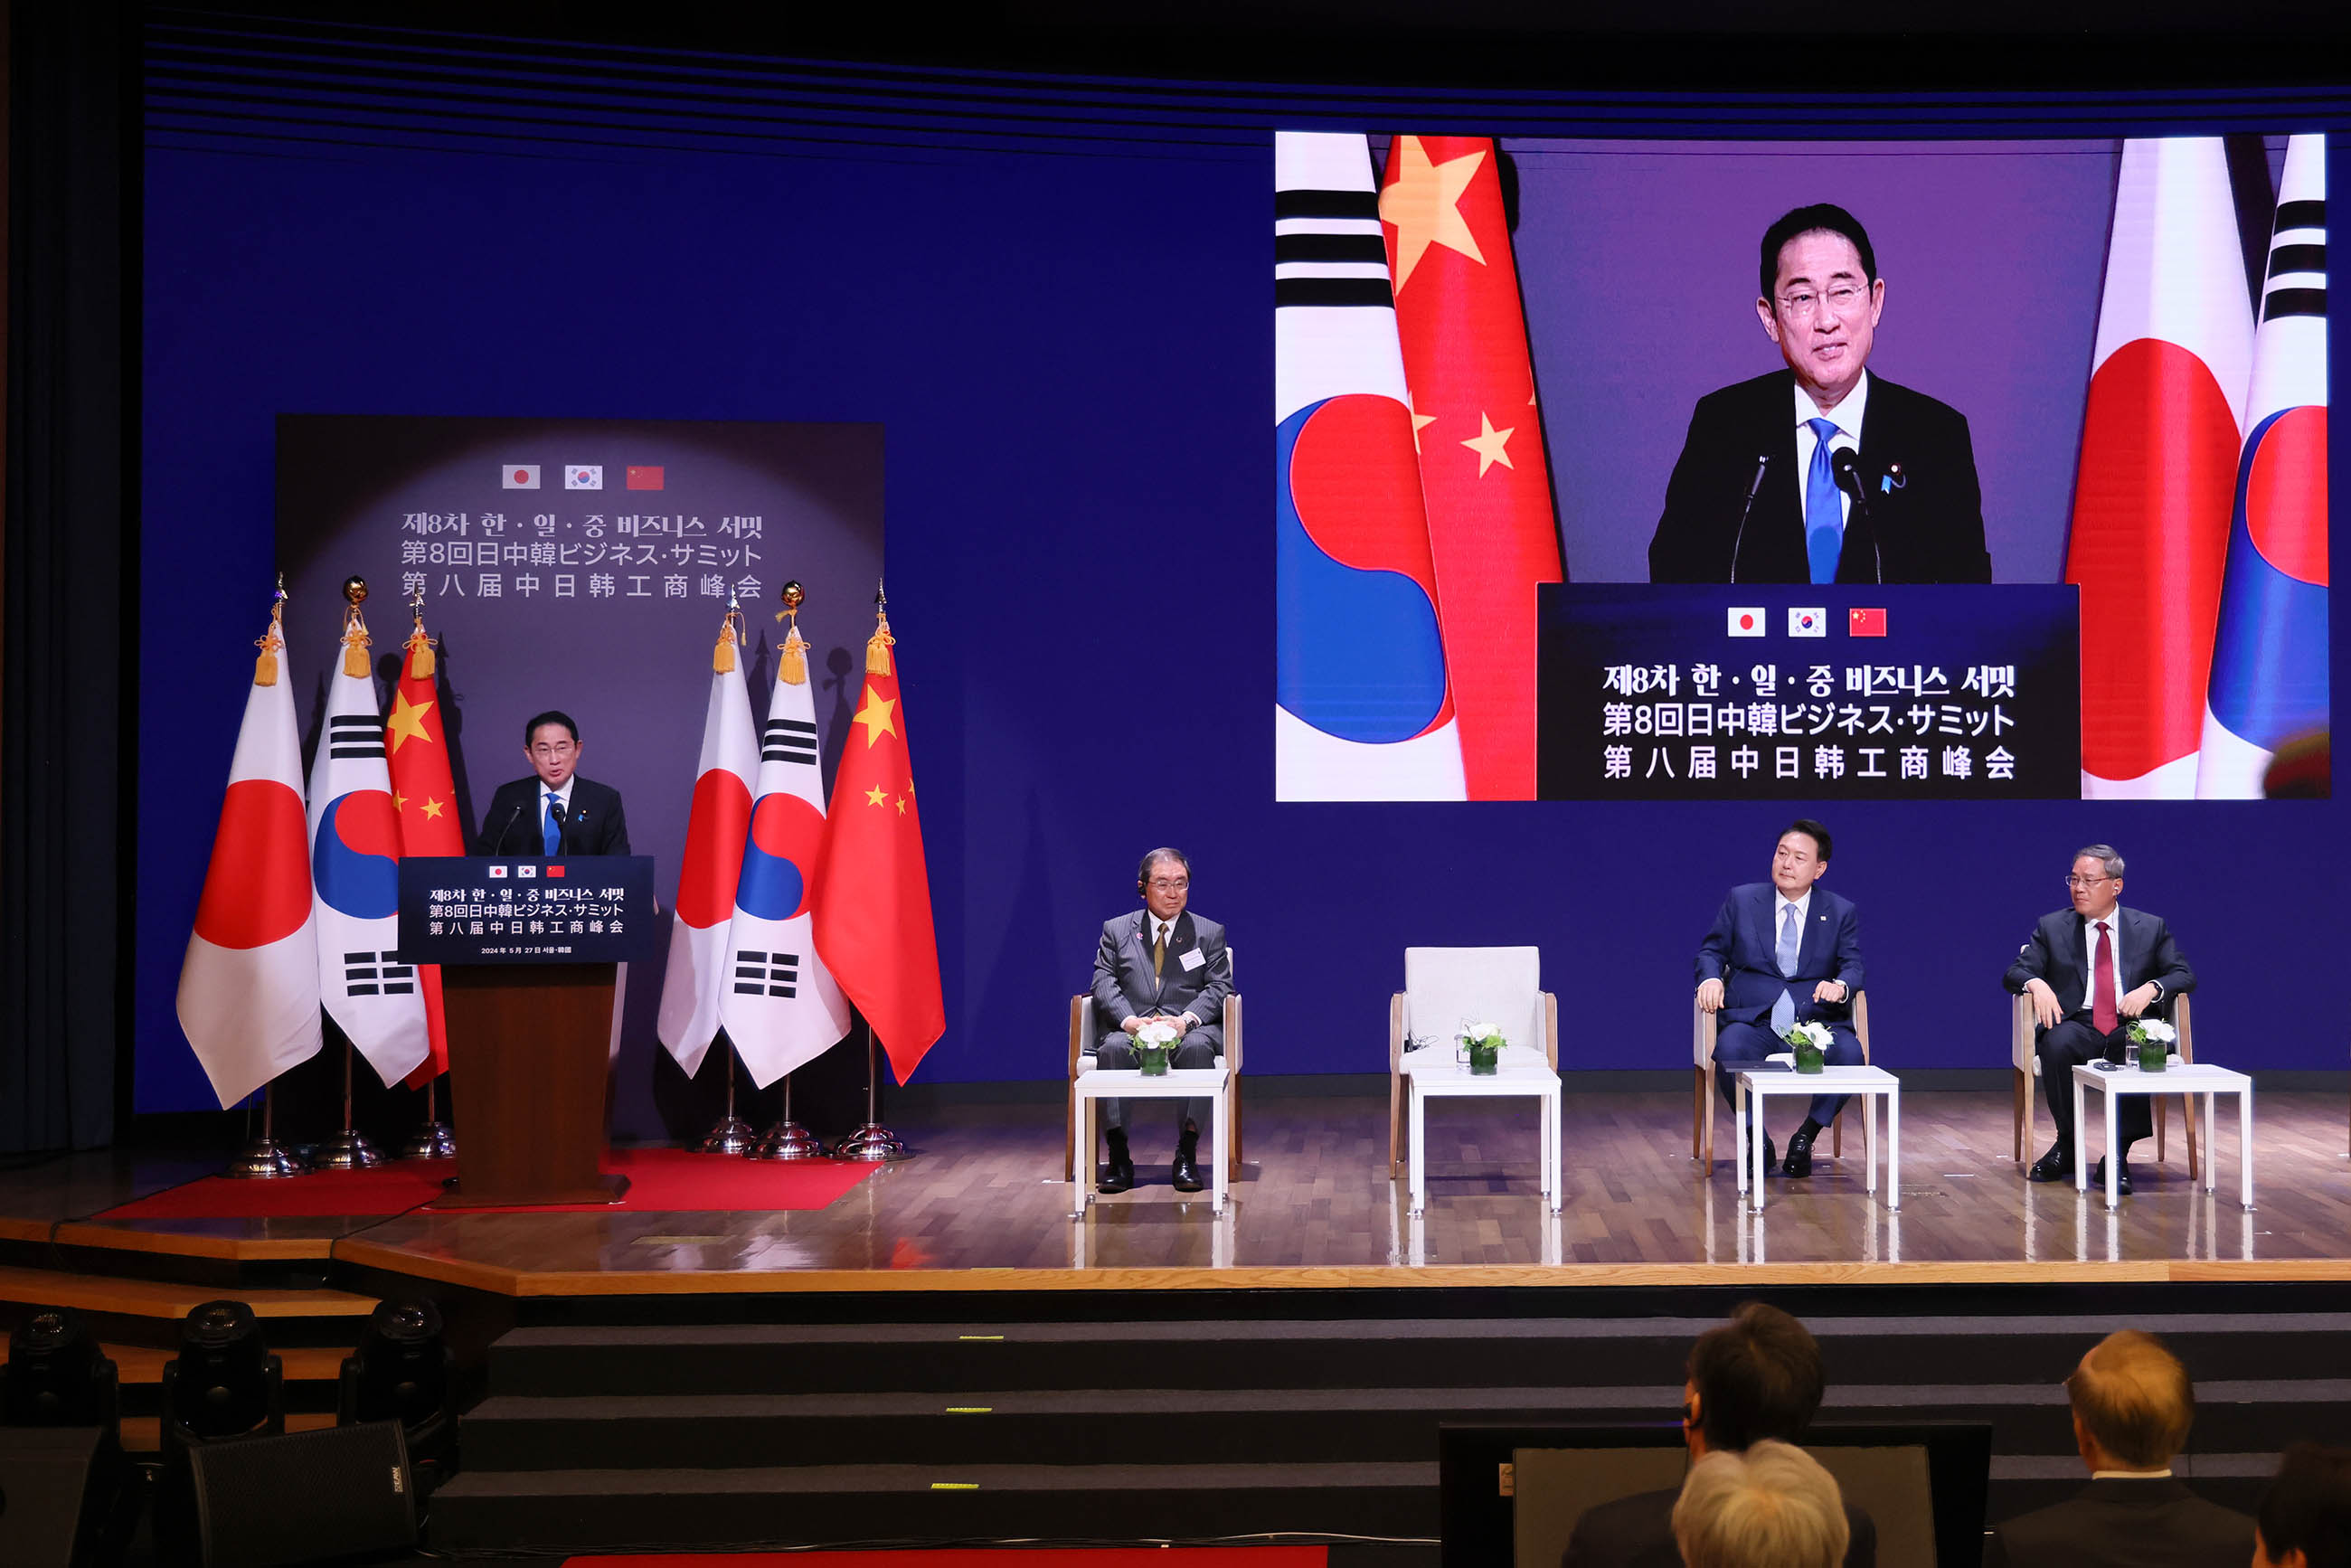 Prime Minister Kishida attending the Japan-China-ROK Business Summit (5)